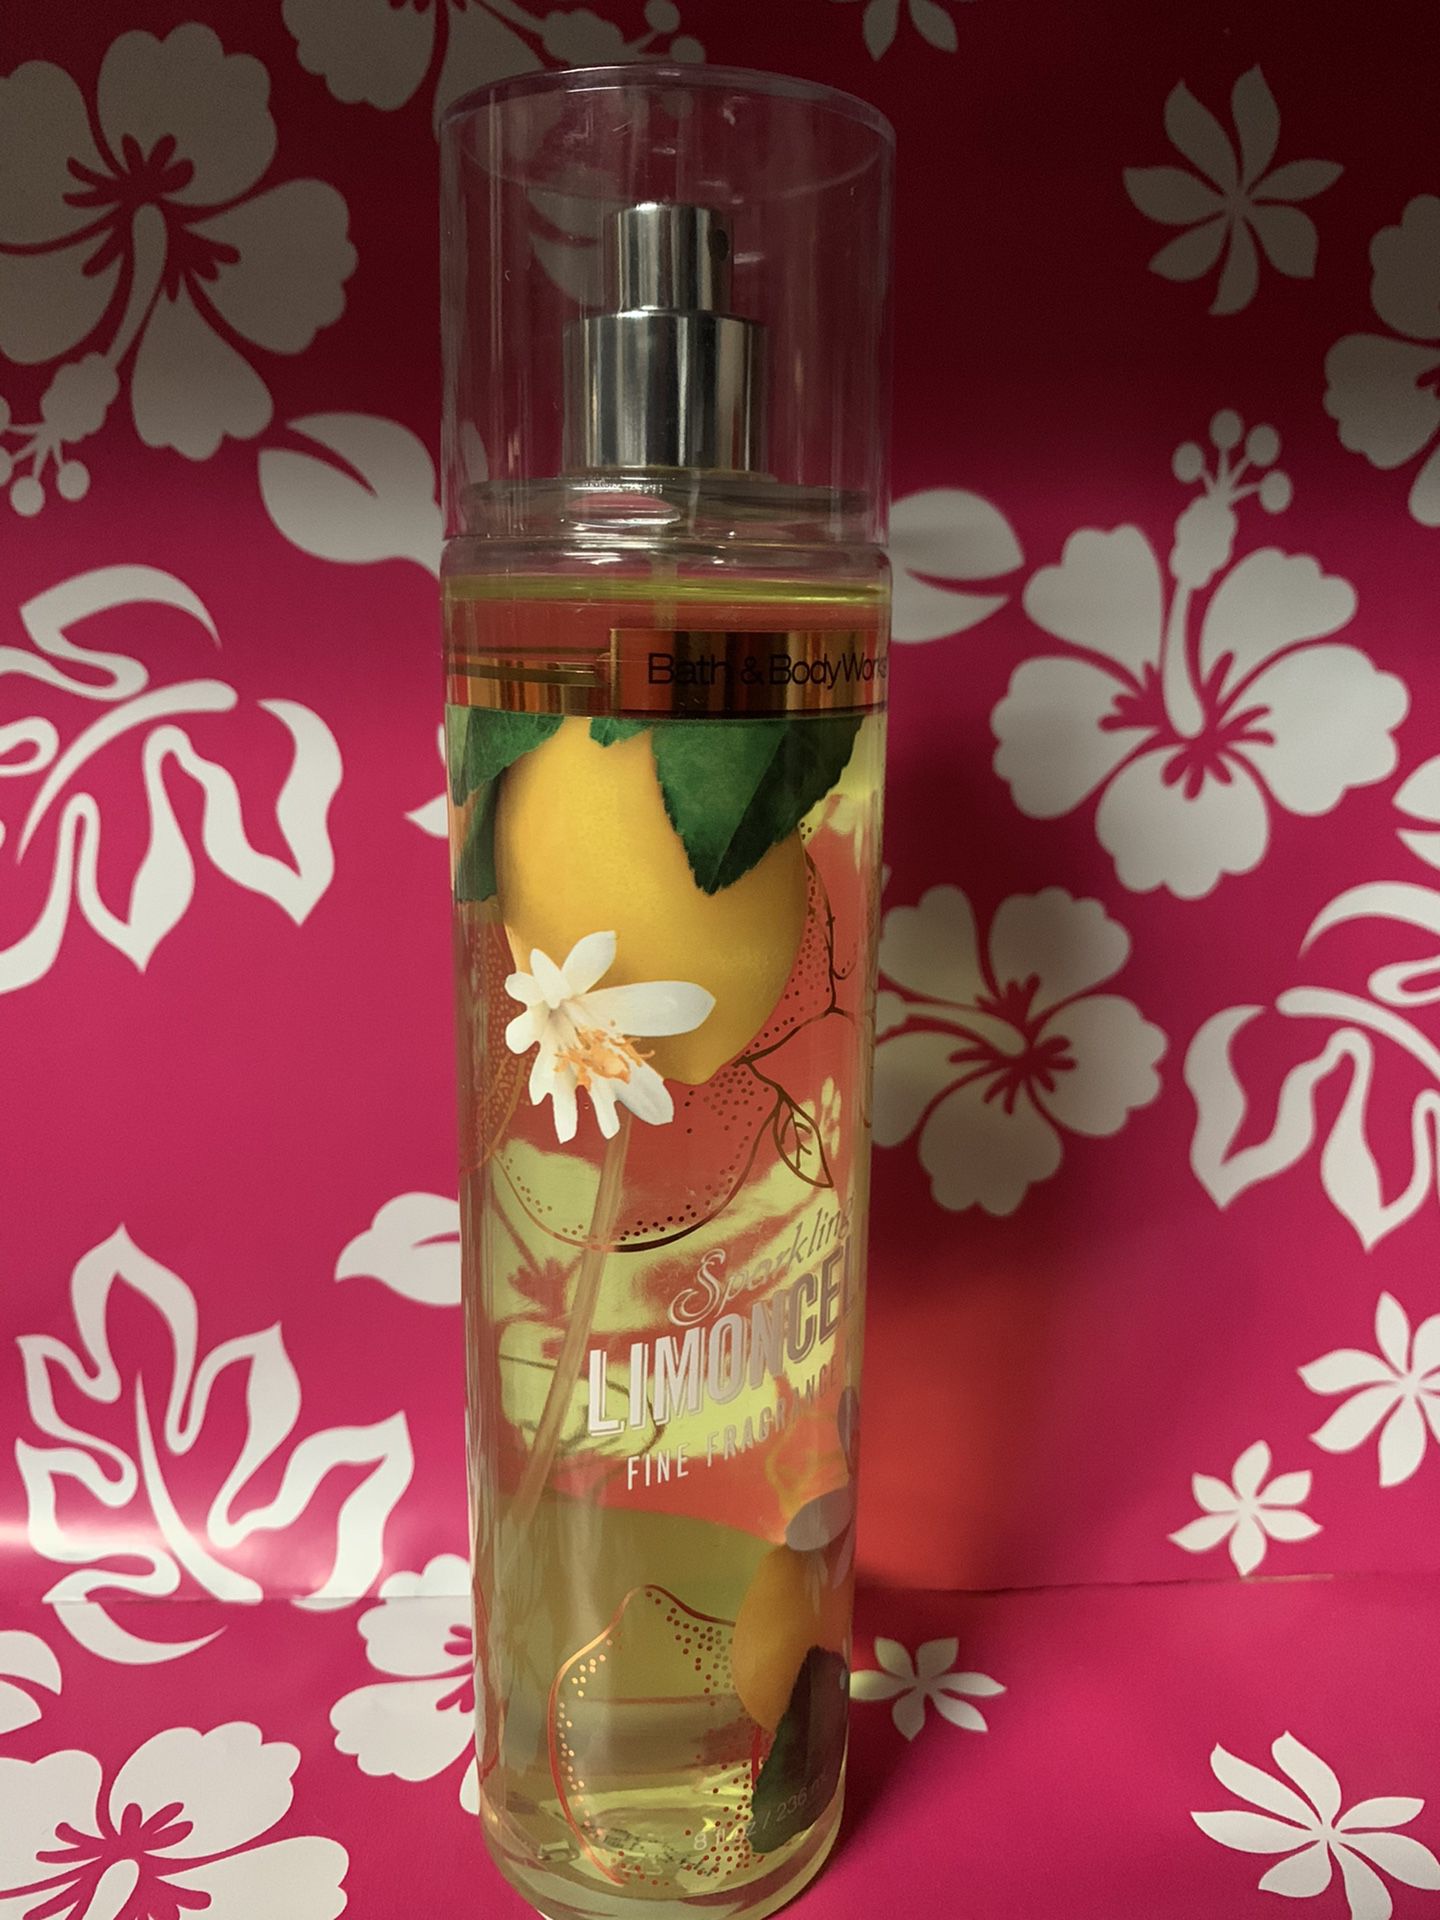 Bath & Body Works Sparkling Limoncello fragrance